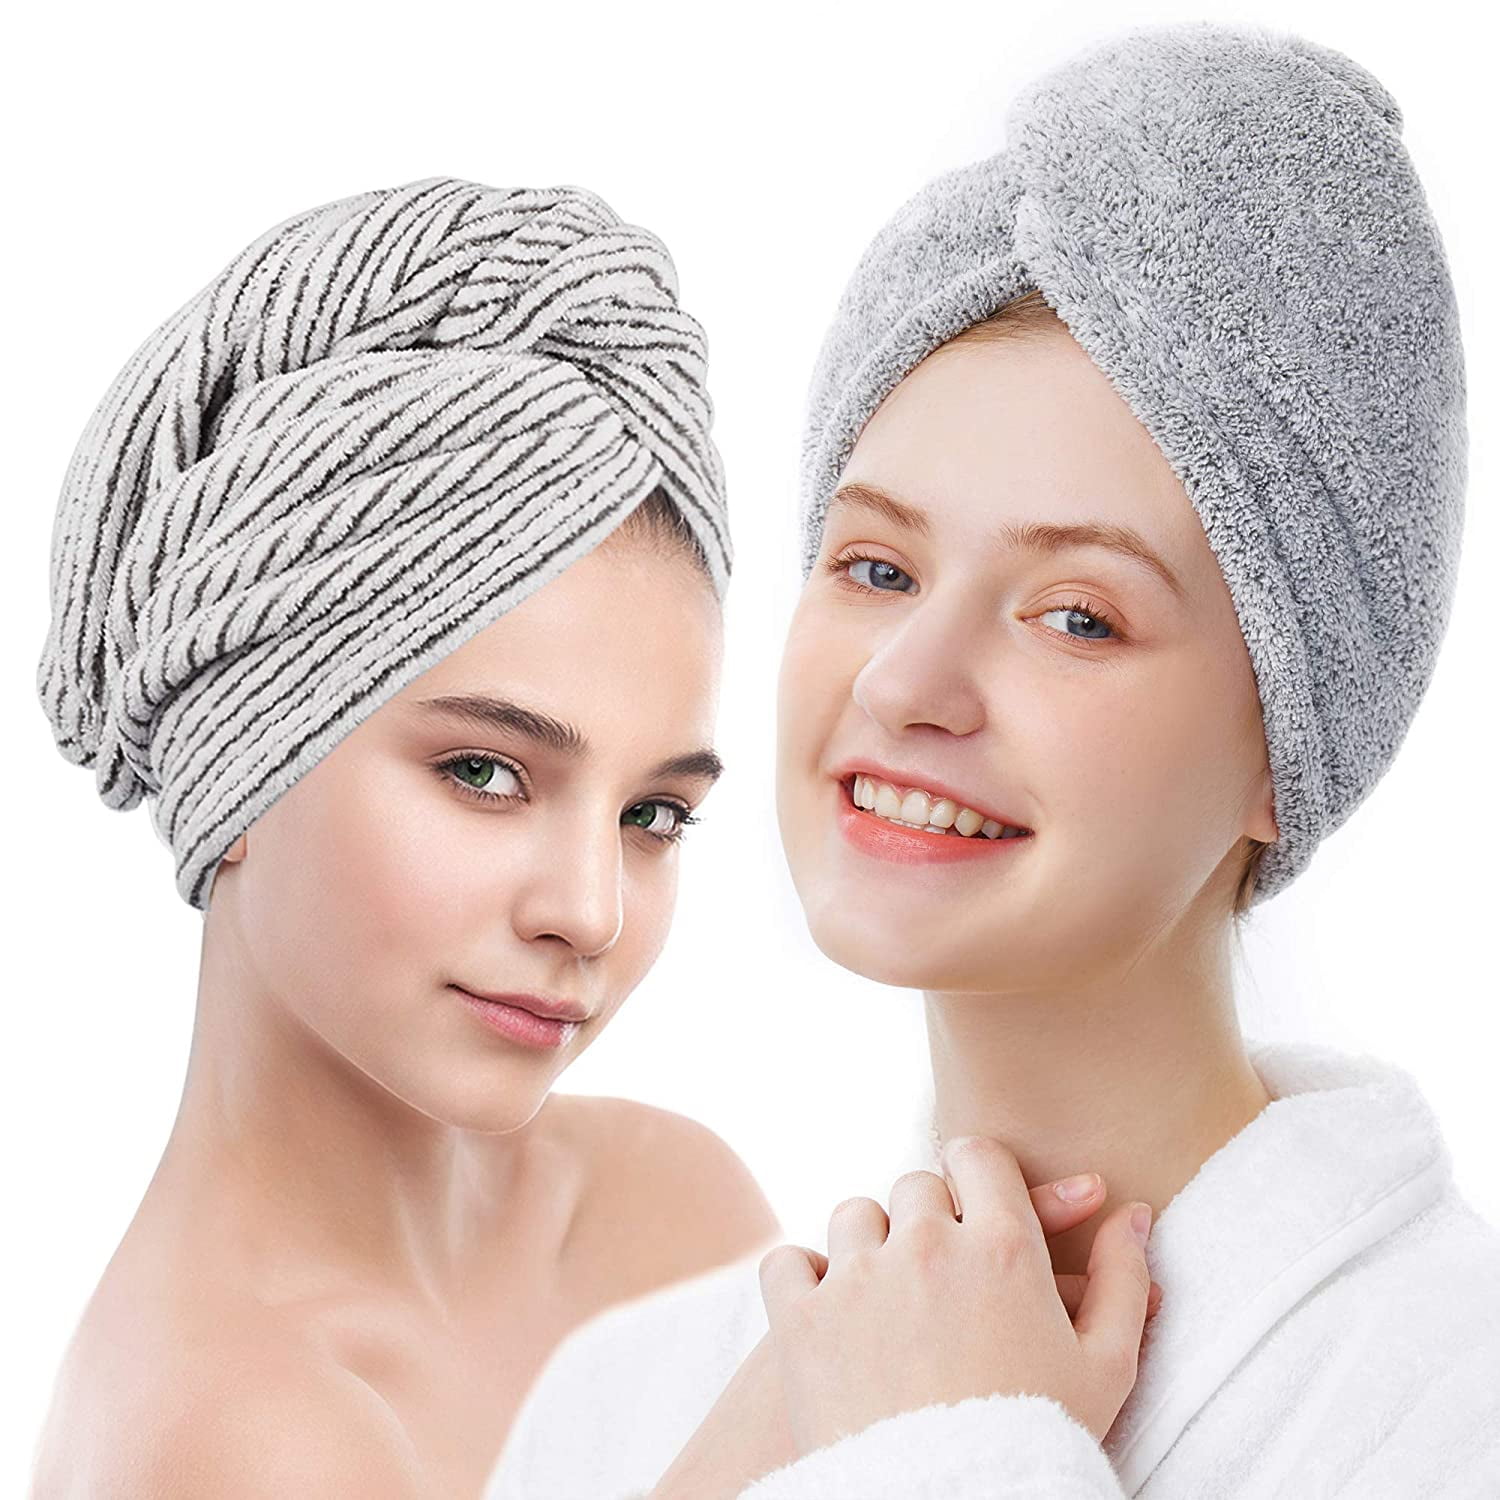 3x Microfiber Hair Towel Hair Drying Towels Wrap Turban Absorbent Bath Dryer Cap 